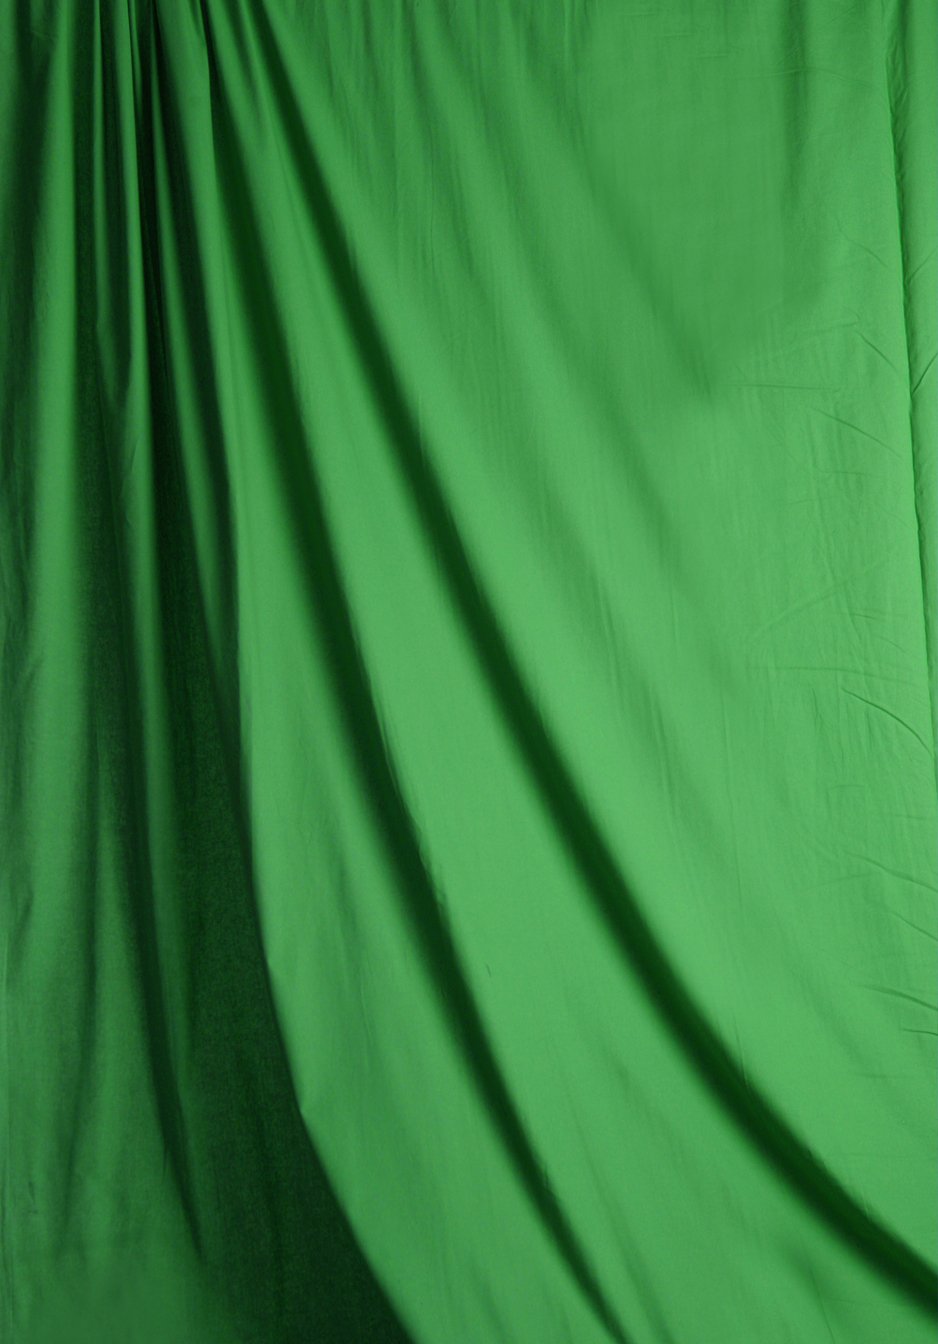 Chroma Green Solid Muslin Backdrop